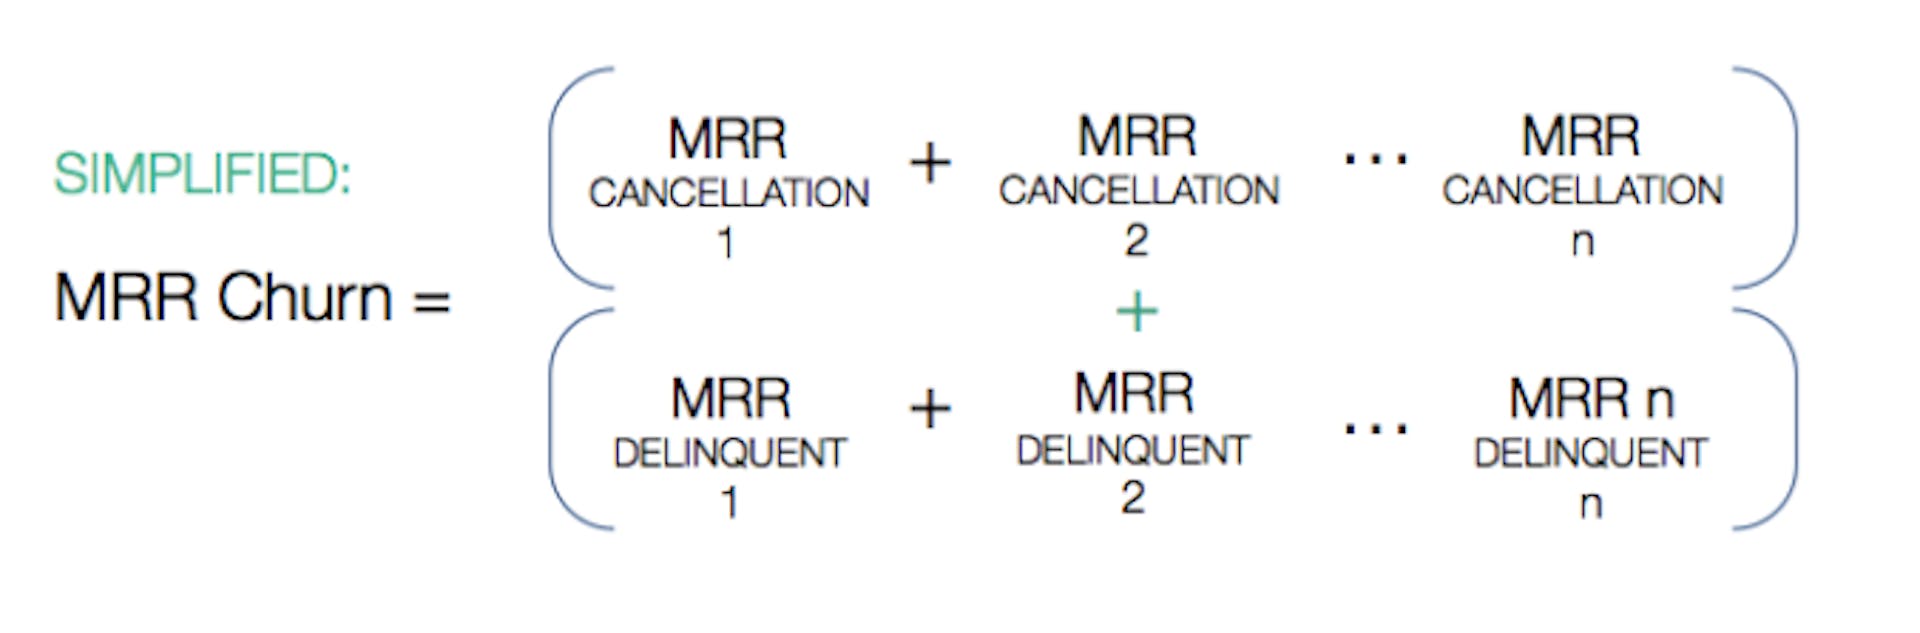 Simplified MRR churn = MRR cancellation 1 + MRR cancellation  2 ... MRR cancellation n + MRR delinquent 1 + MRR delinquent 2 ... + MRR delinquent n